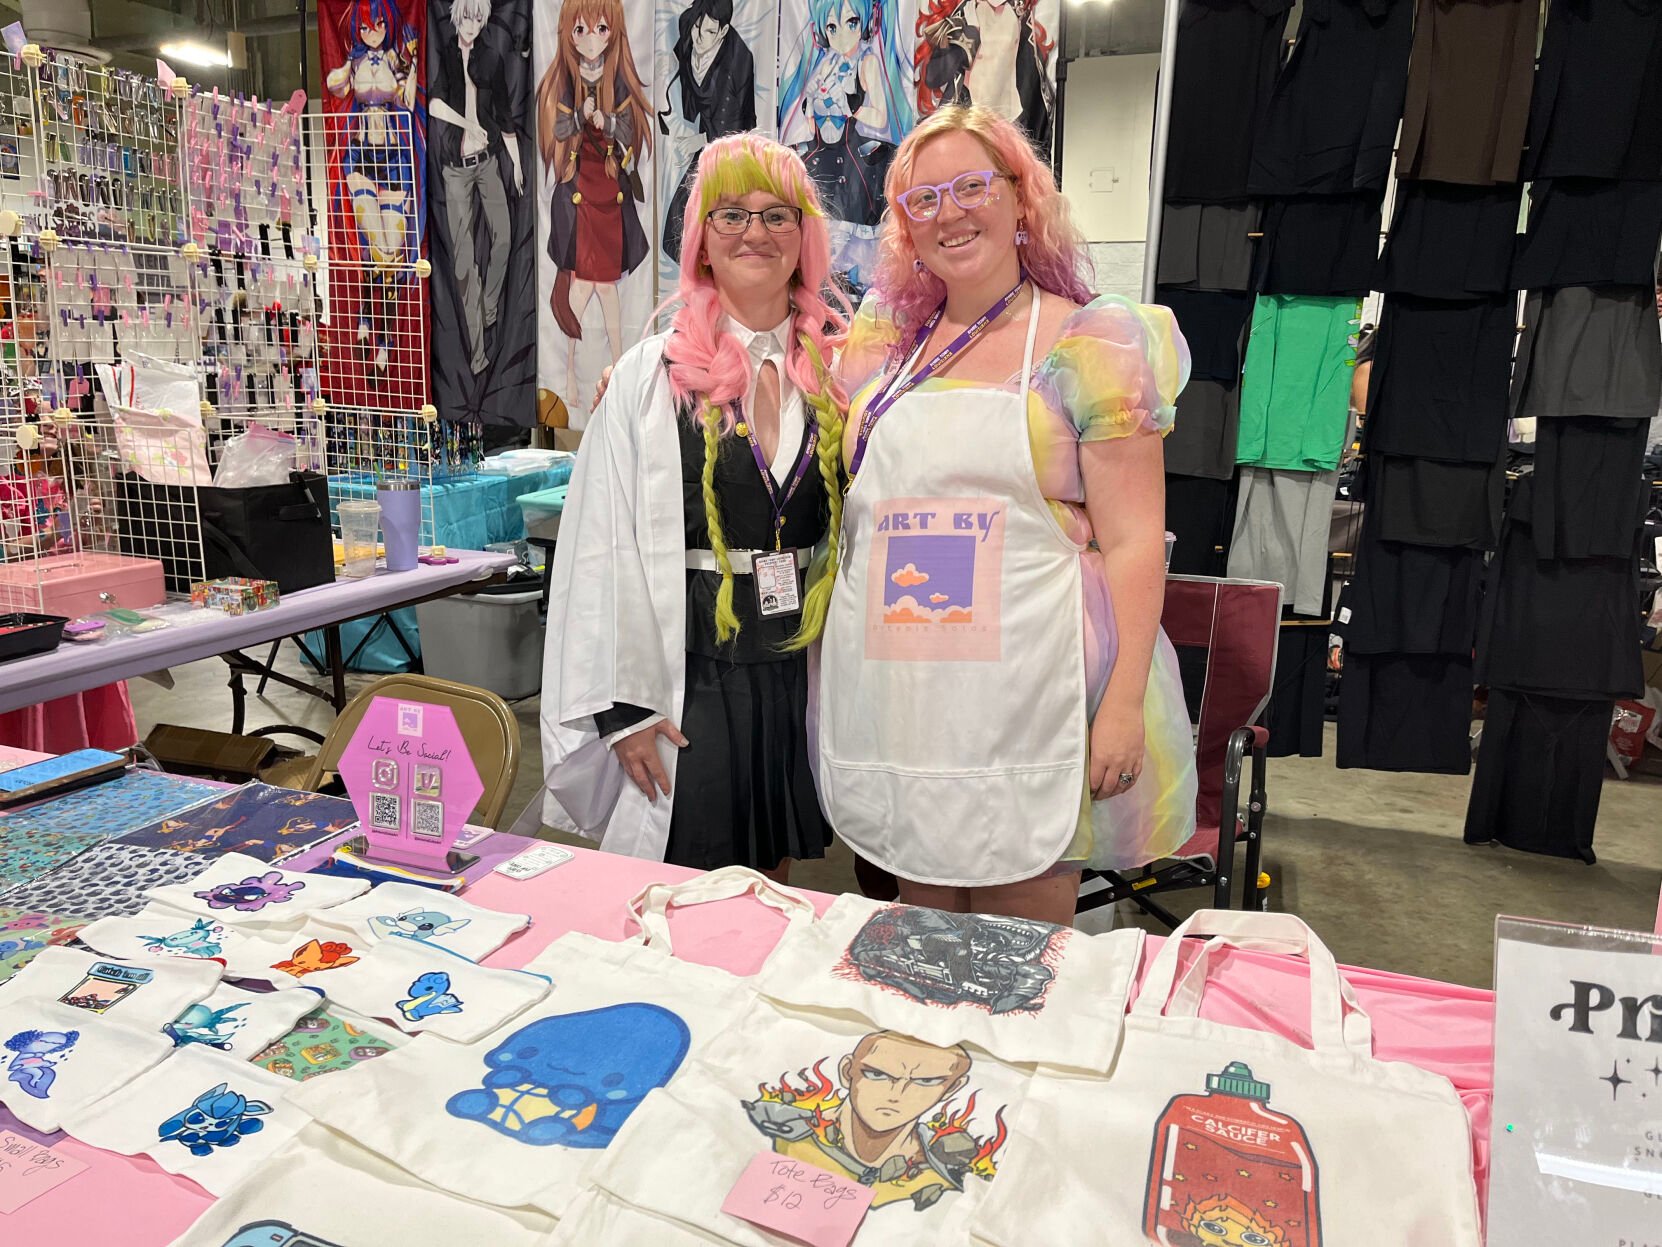 Otaku U anime convention returning for second year at Schoolcraft College –  News – Schoolcraft College